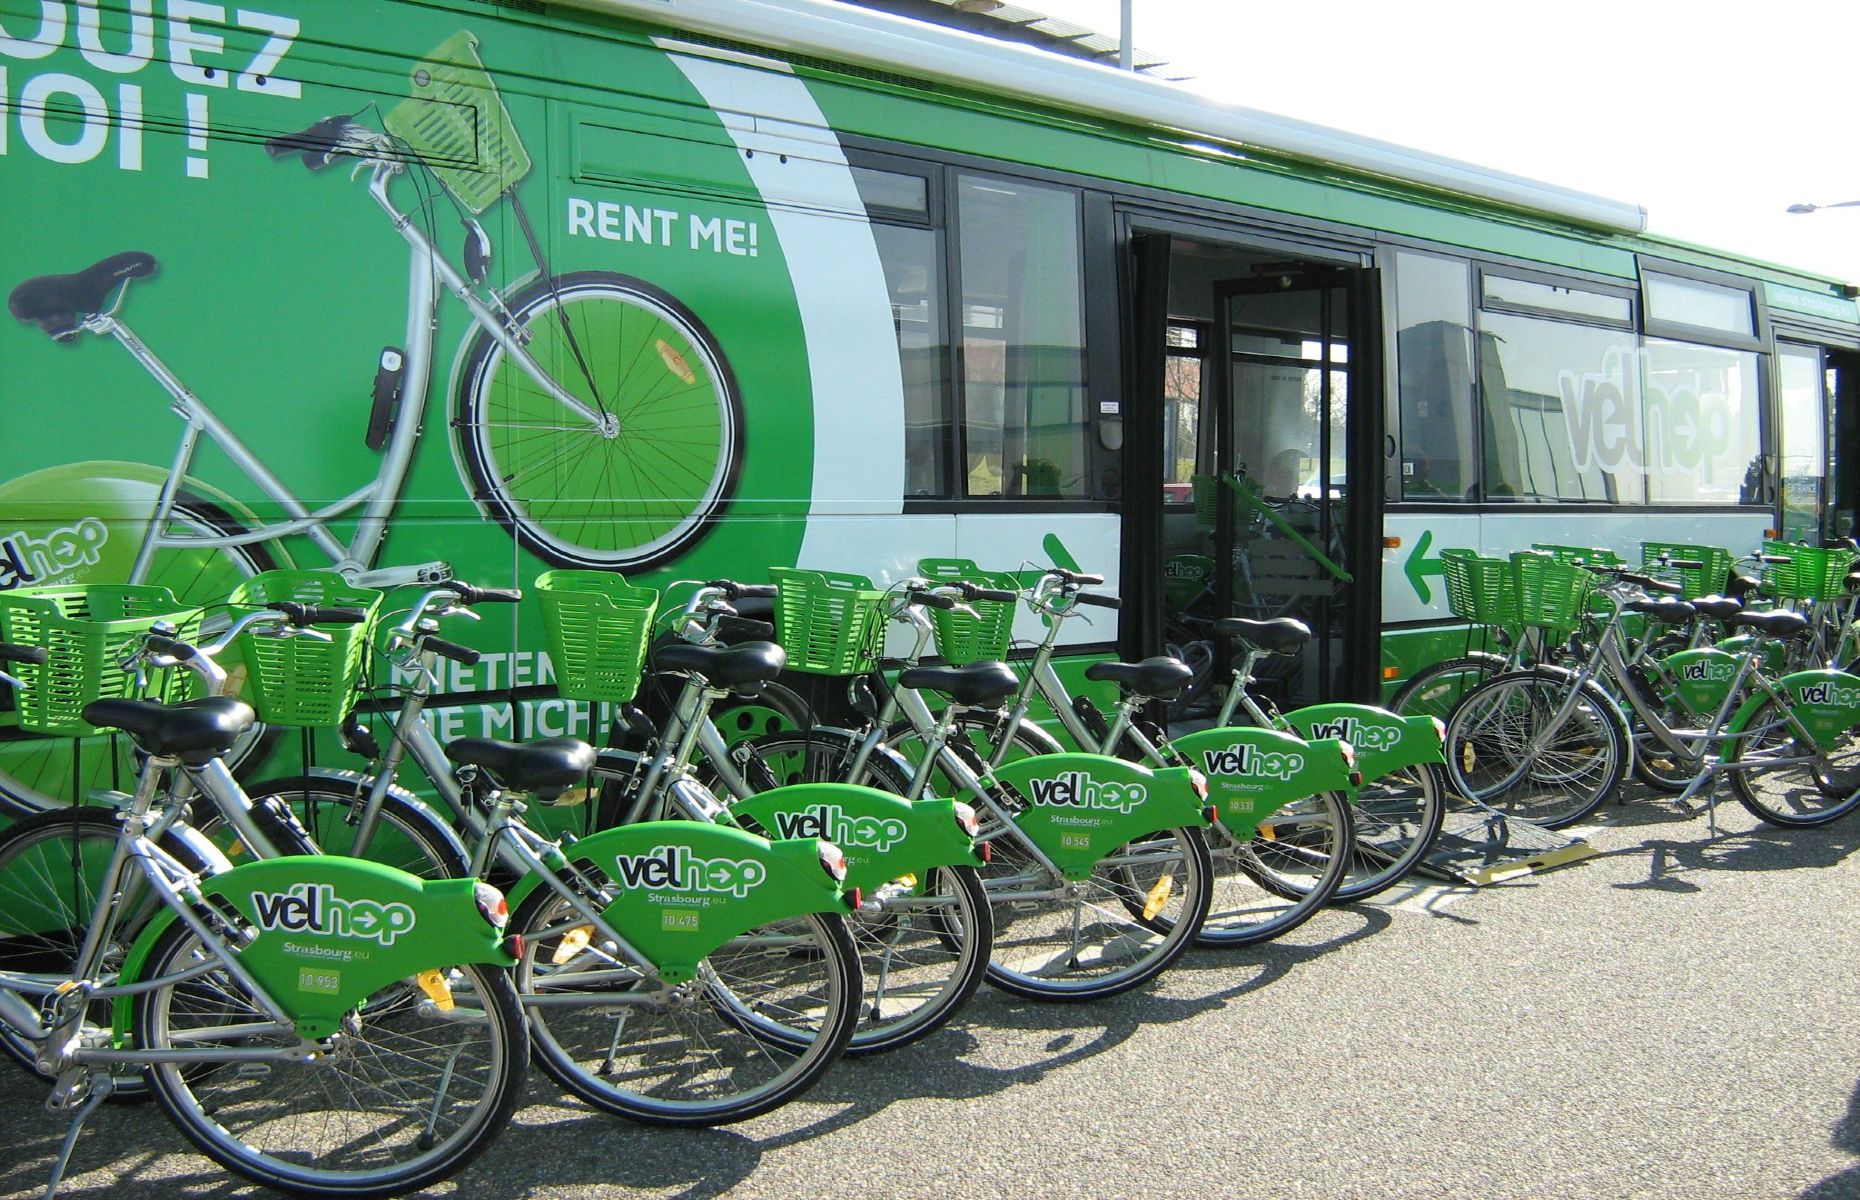 Velhop bikes lined up (Image: Velhop Strasbourg/Facebook)